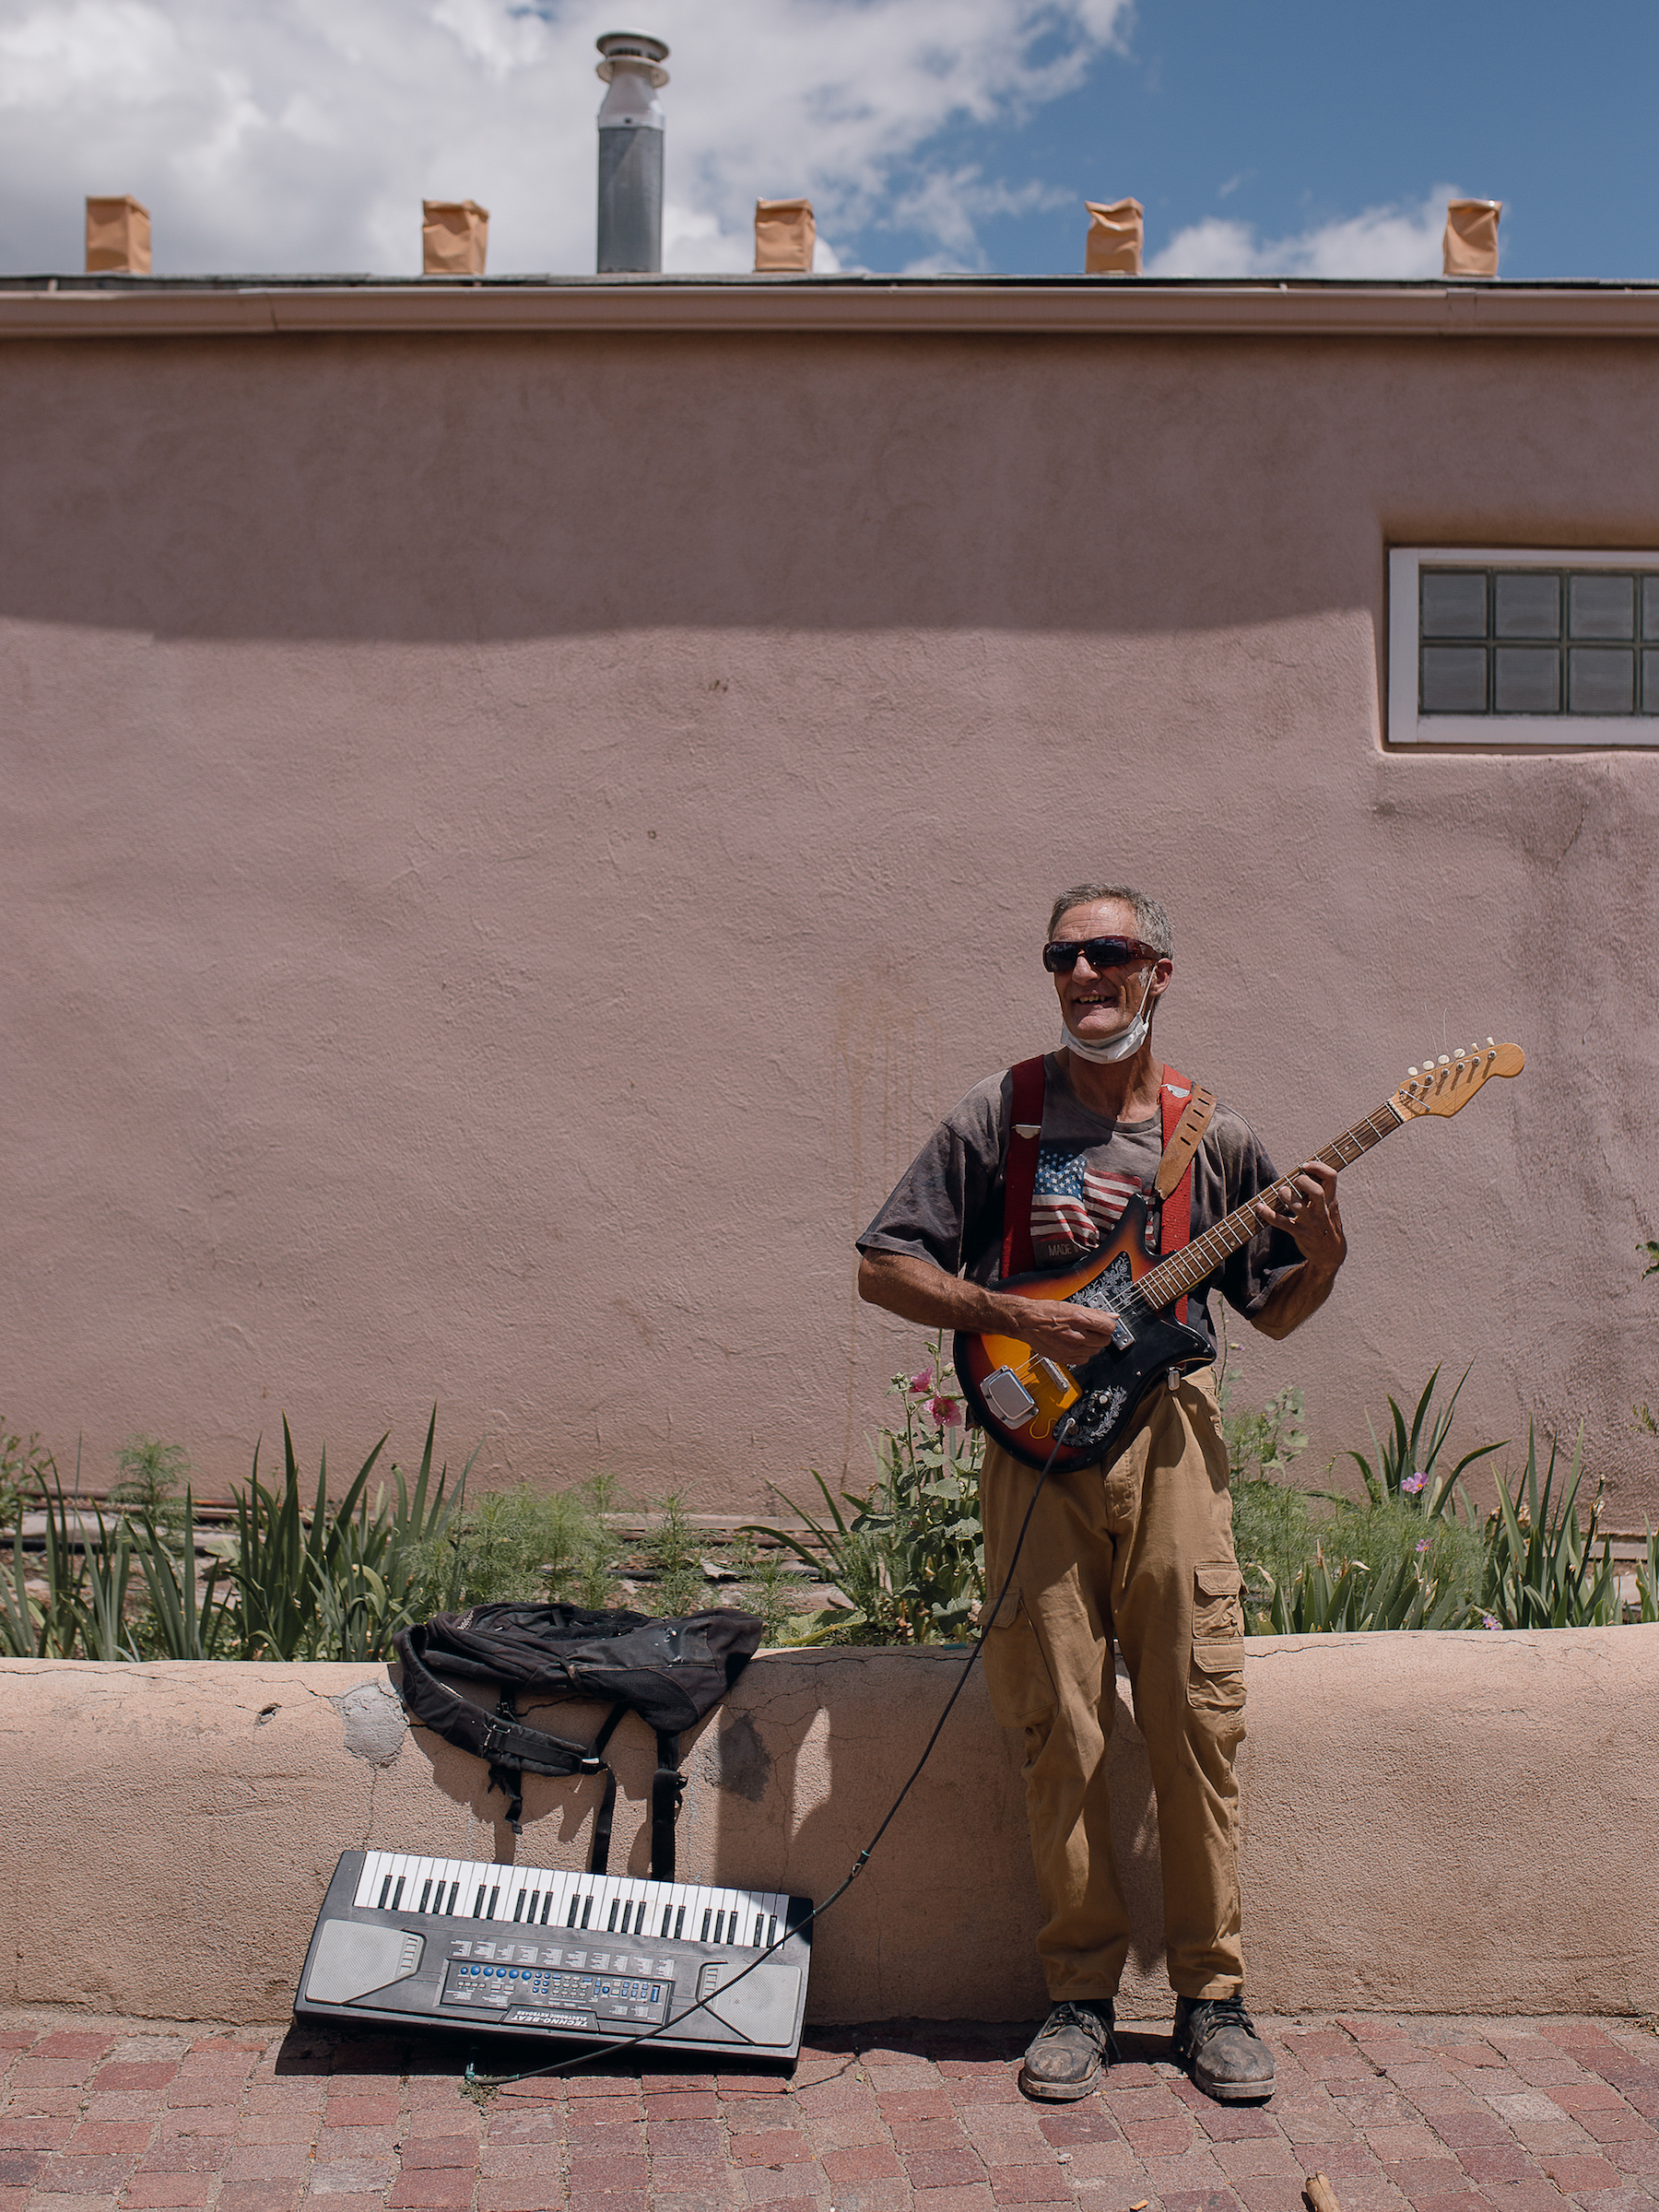 Jason Starr, The Musician in Taos, 2020, Digital inkjet print,